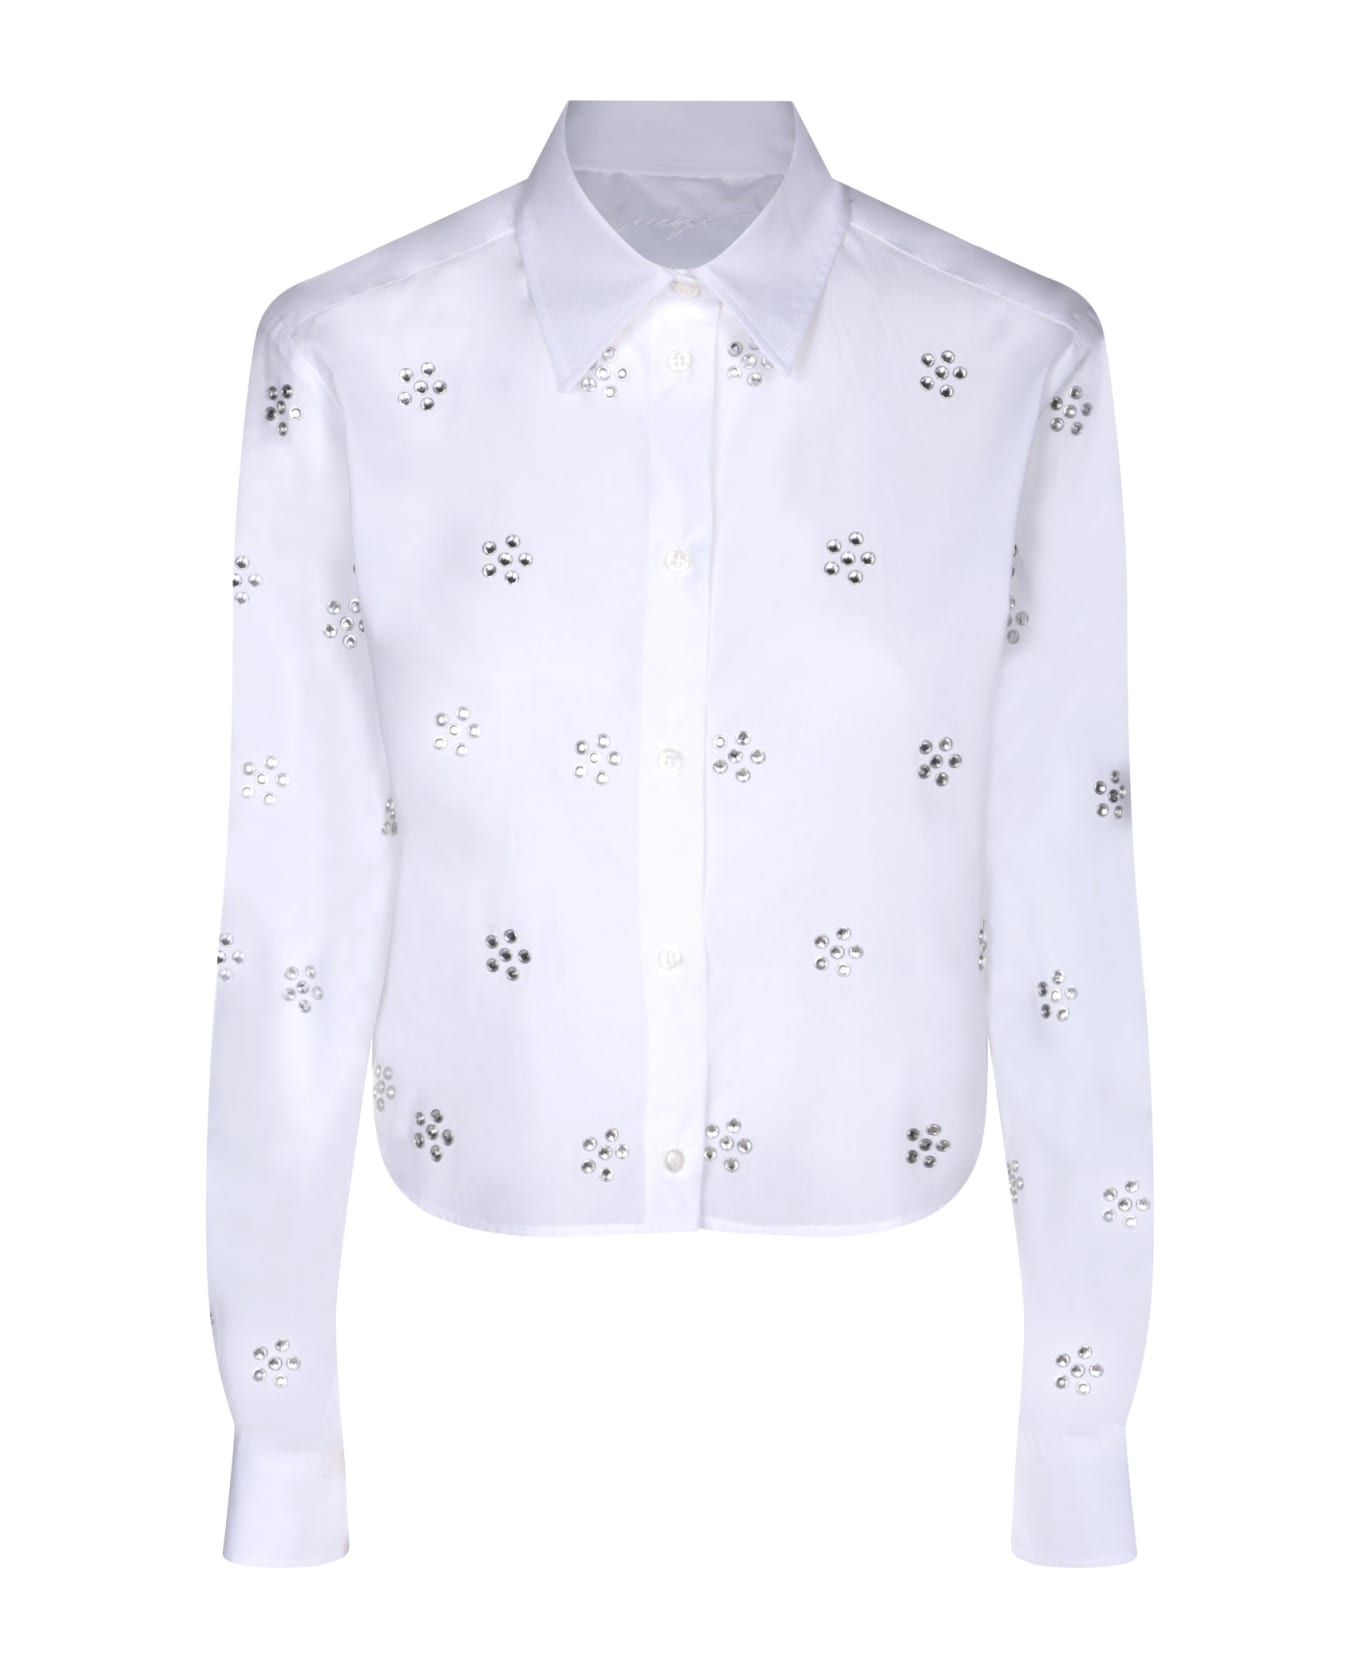 MSGM Rhinestone Patch White Shirt - White